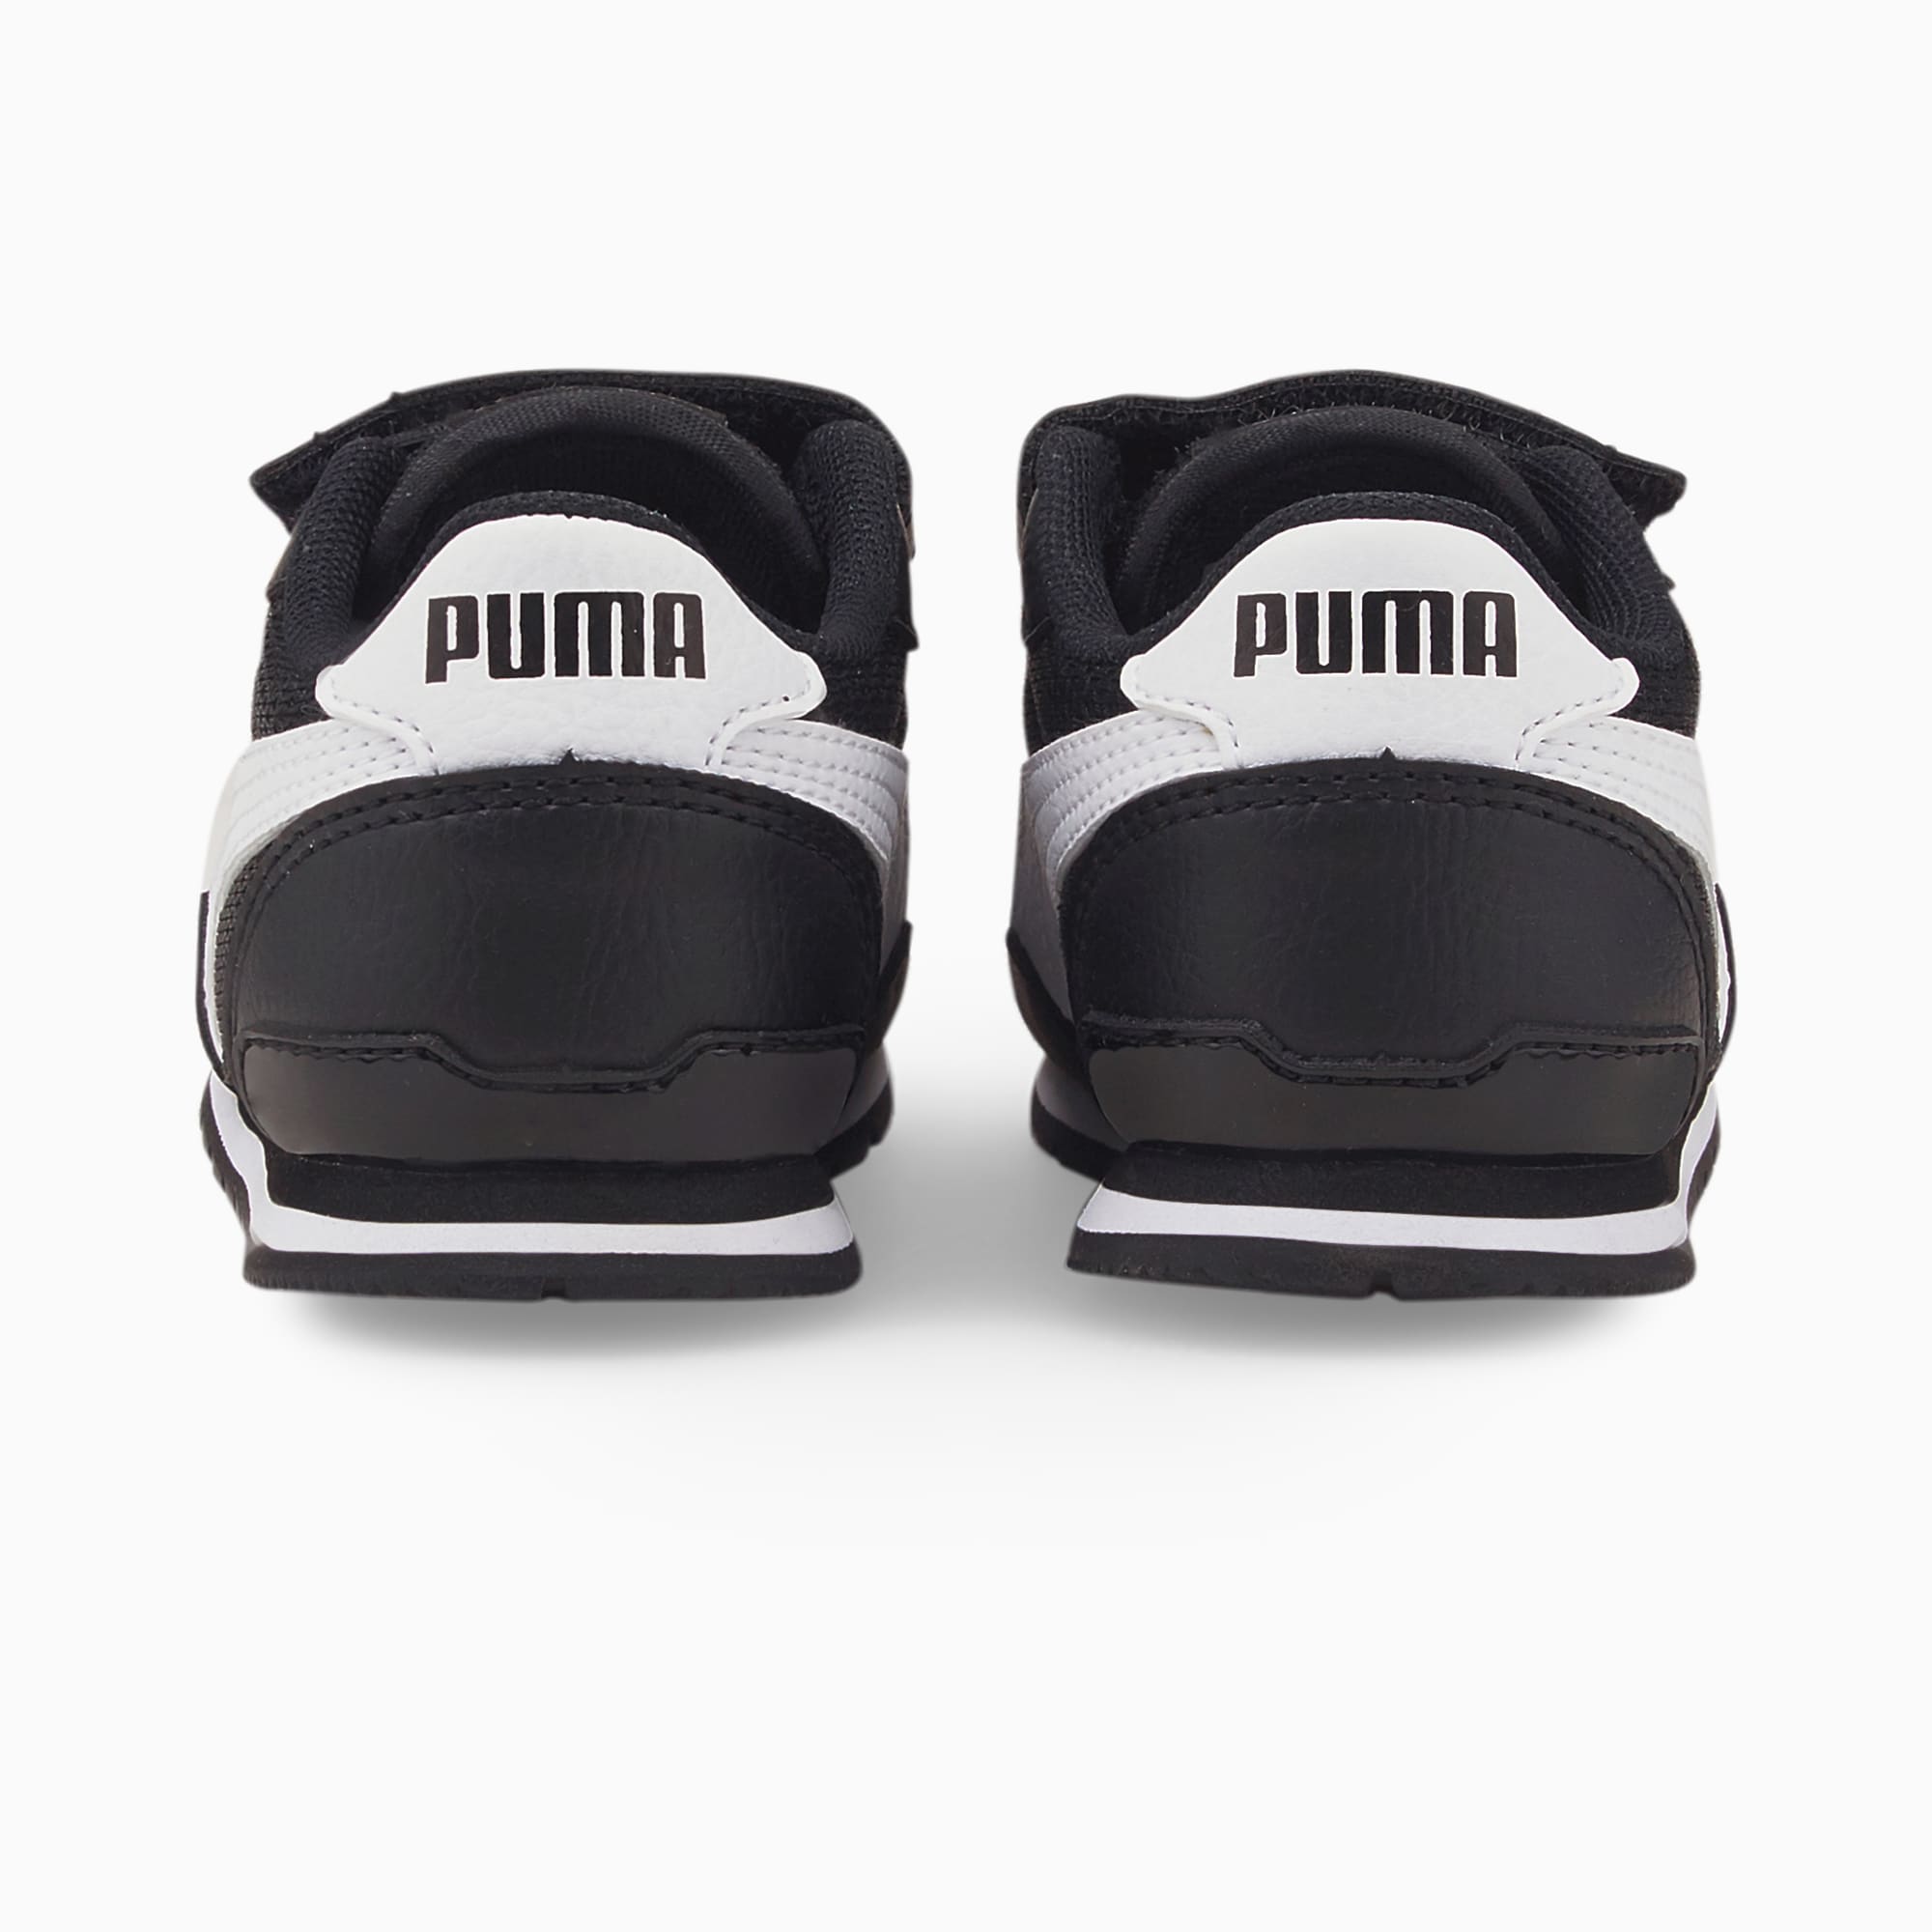 PUMA ST Runner V3 Mesh V Babies' Trainers, Black/White, Size 19, Shoes